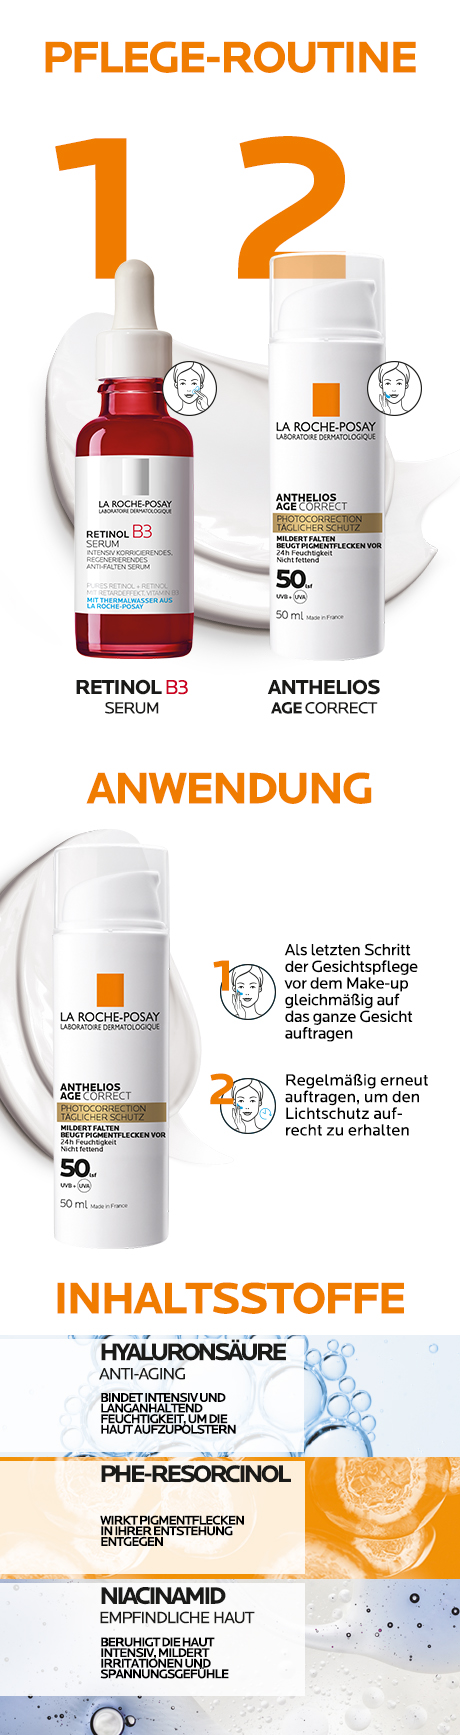 ROCHE-POSAY Anthelios Age Correct Creme LSF 50 (50 ml) -  medikamente-per-klick.de